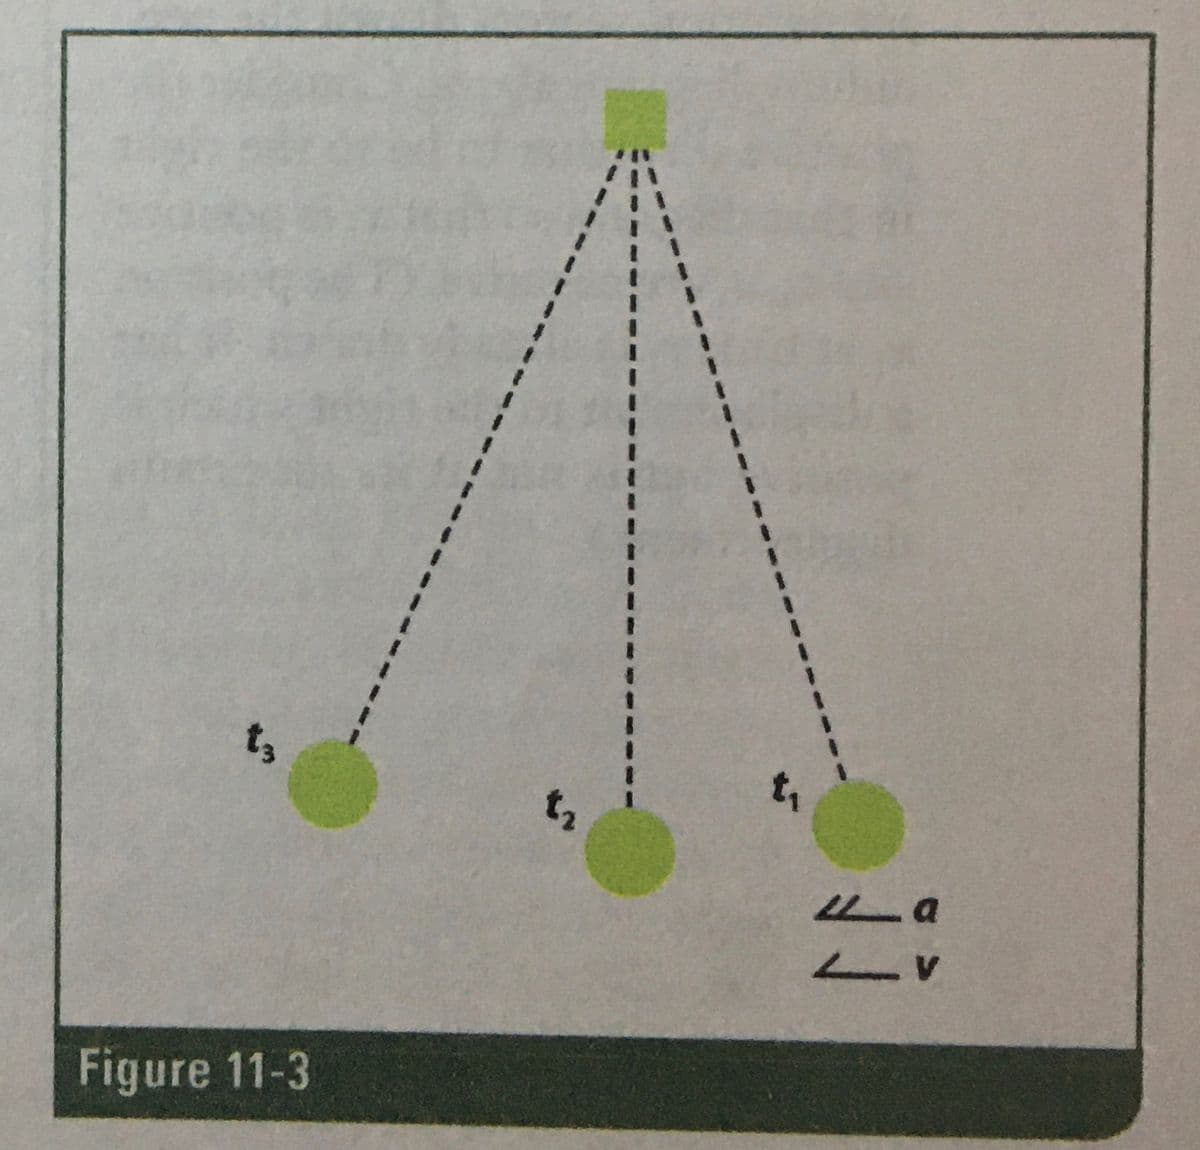 Figure 11-3
LLA
V